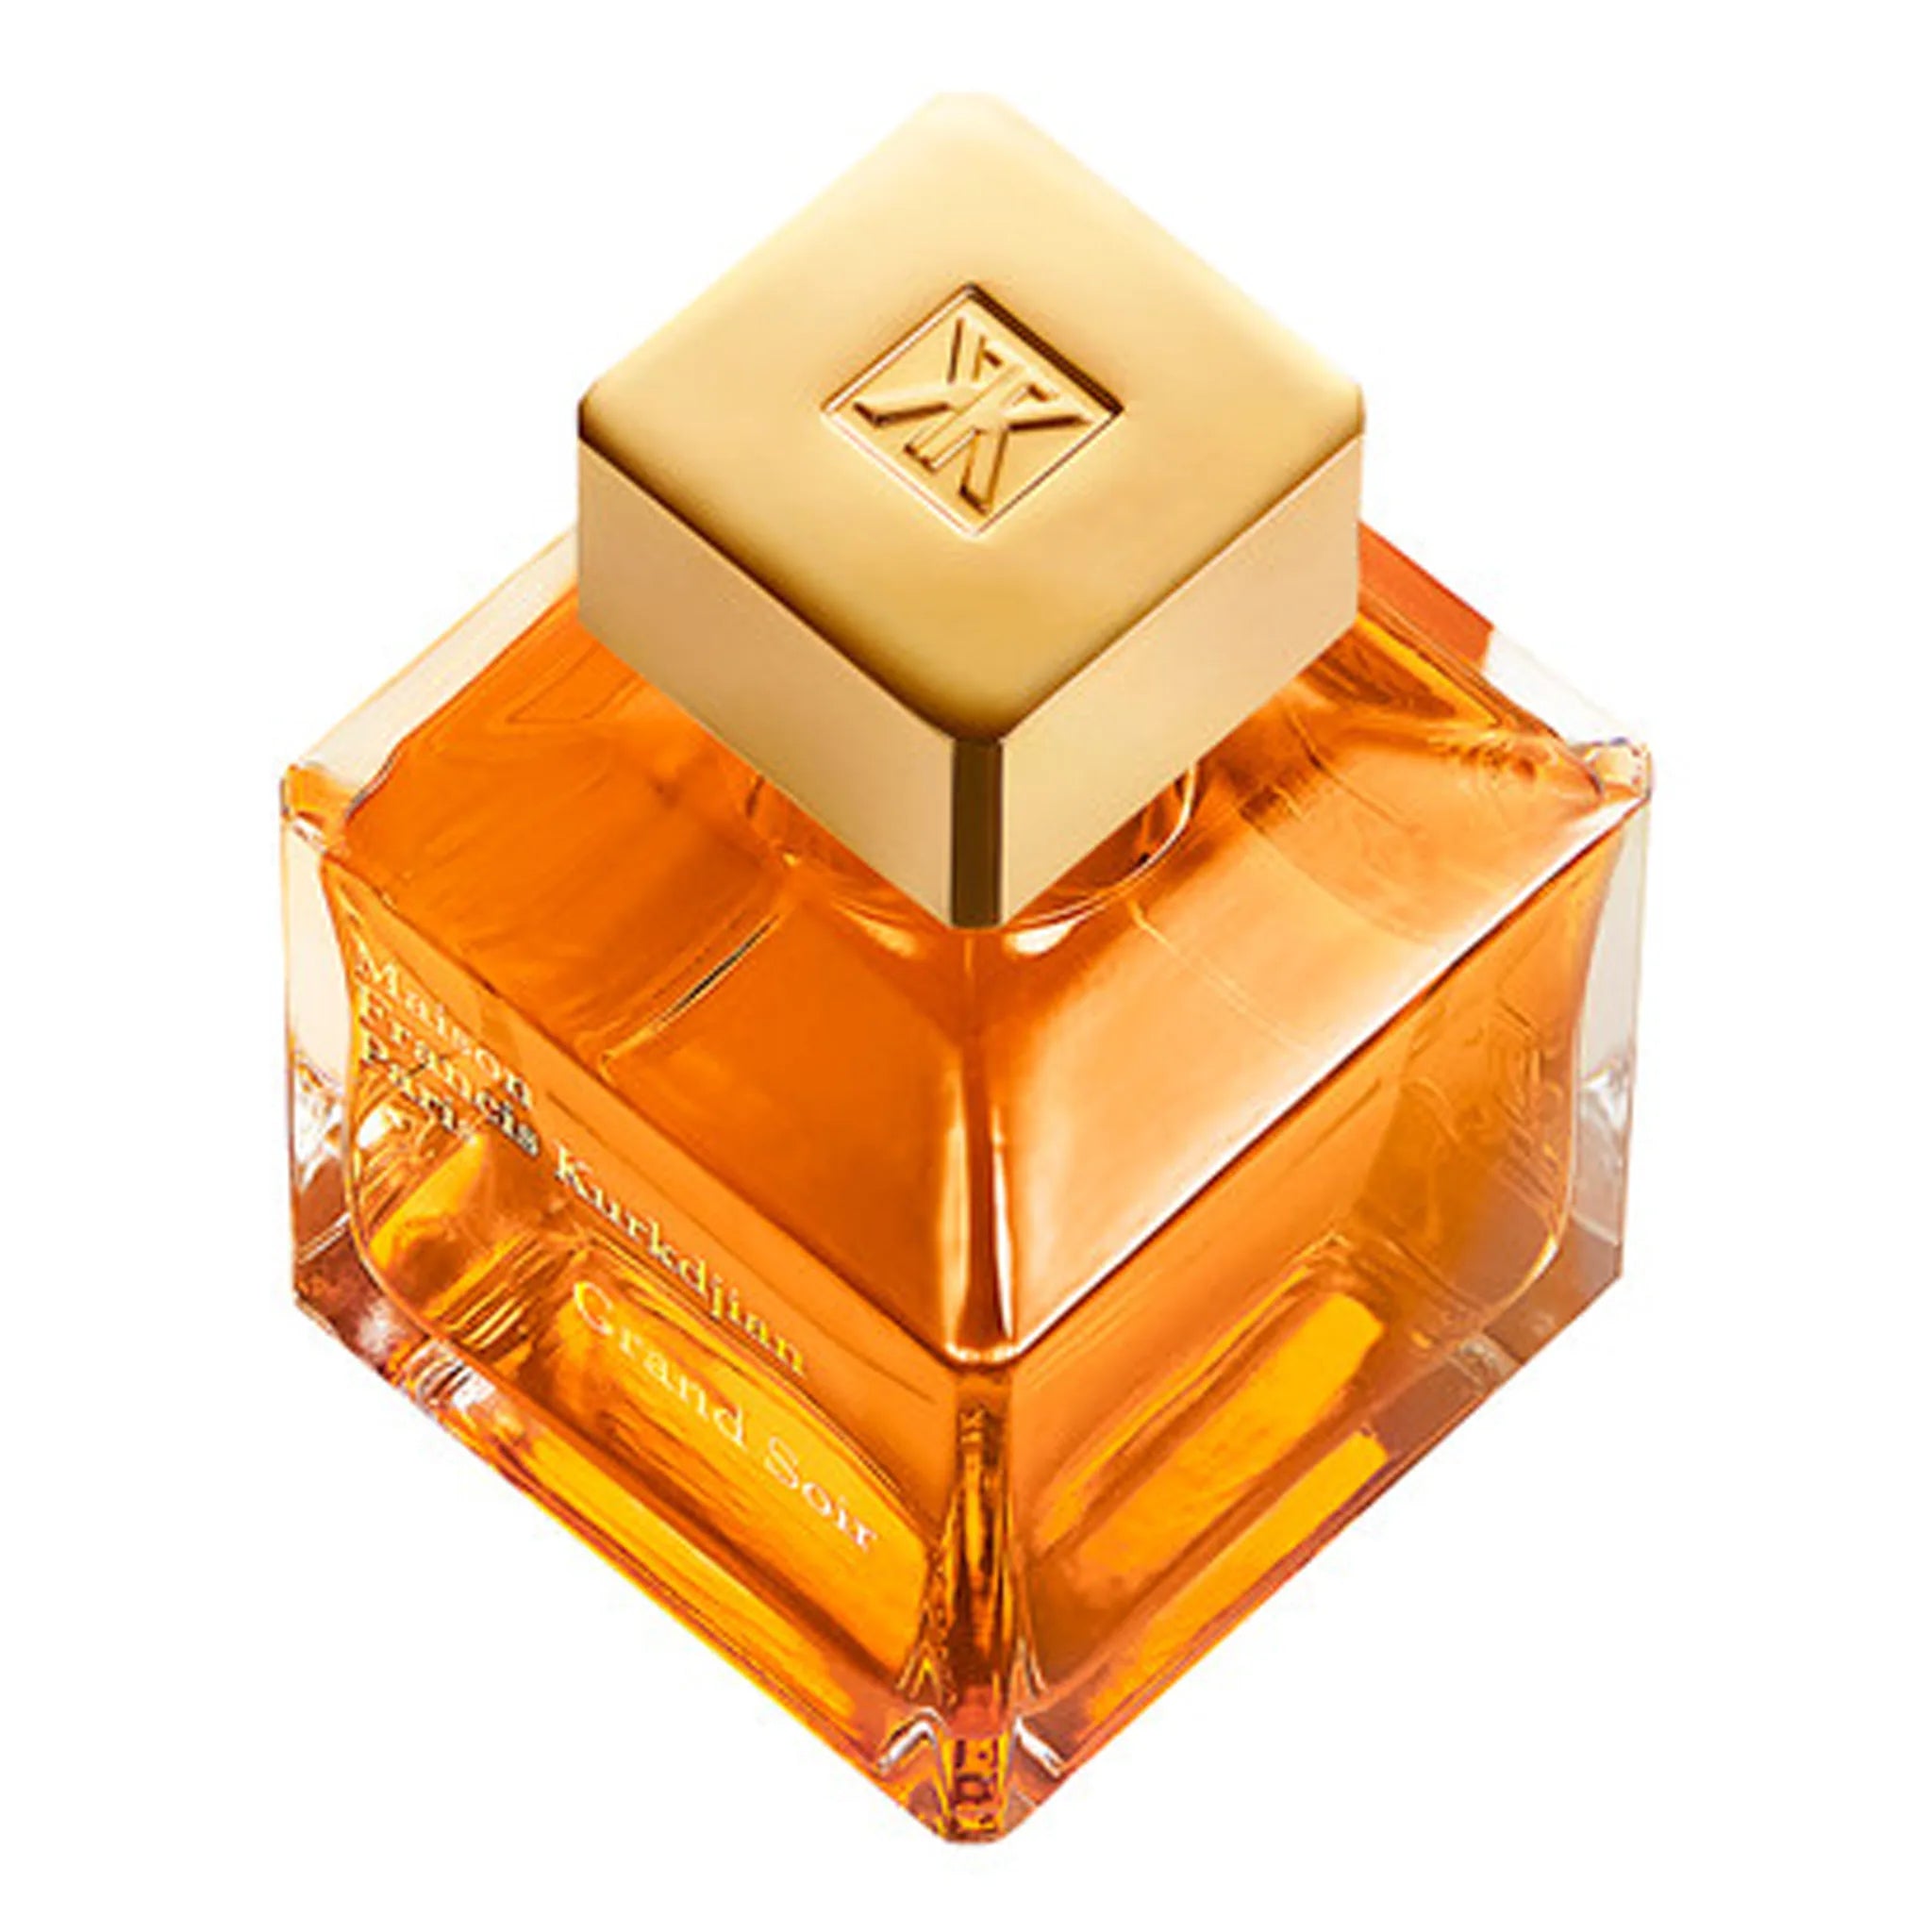 Top view of Maison Francis Kurkdjian Grand Soir Eau De Parfum 70ml